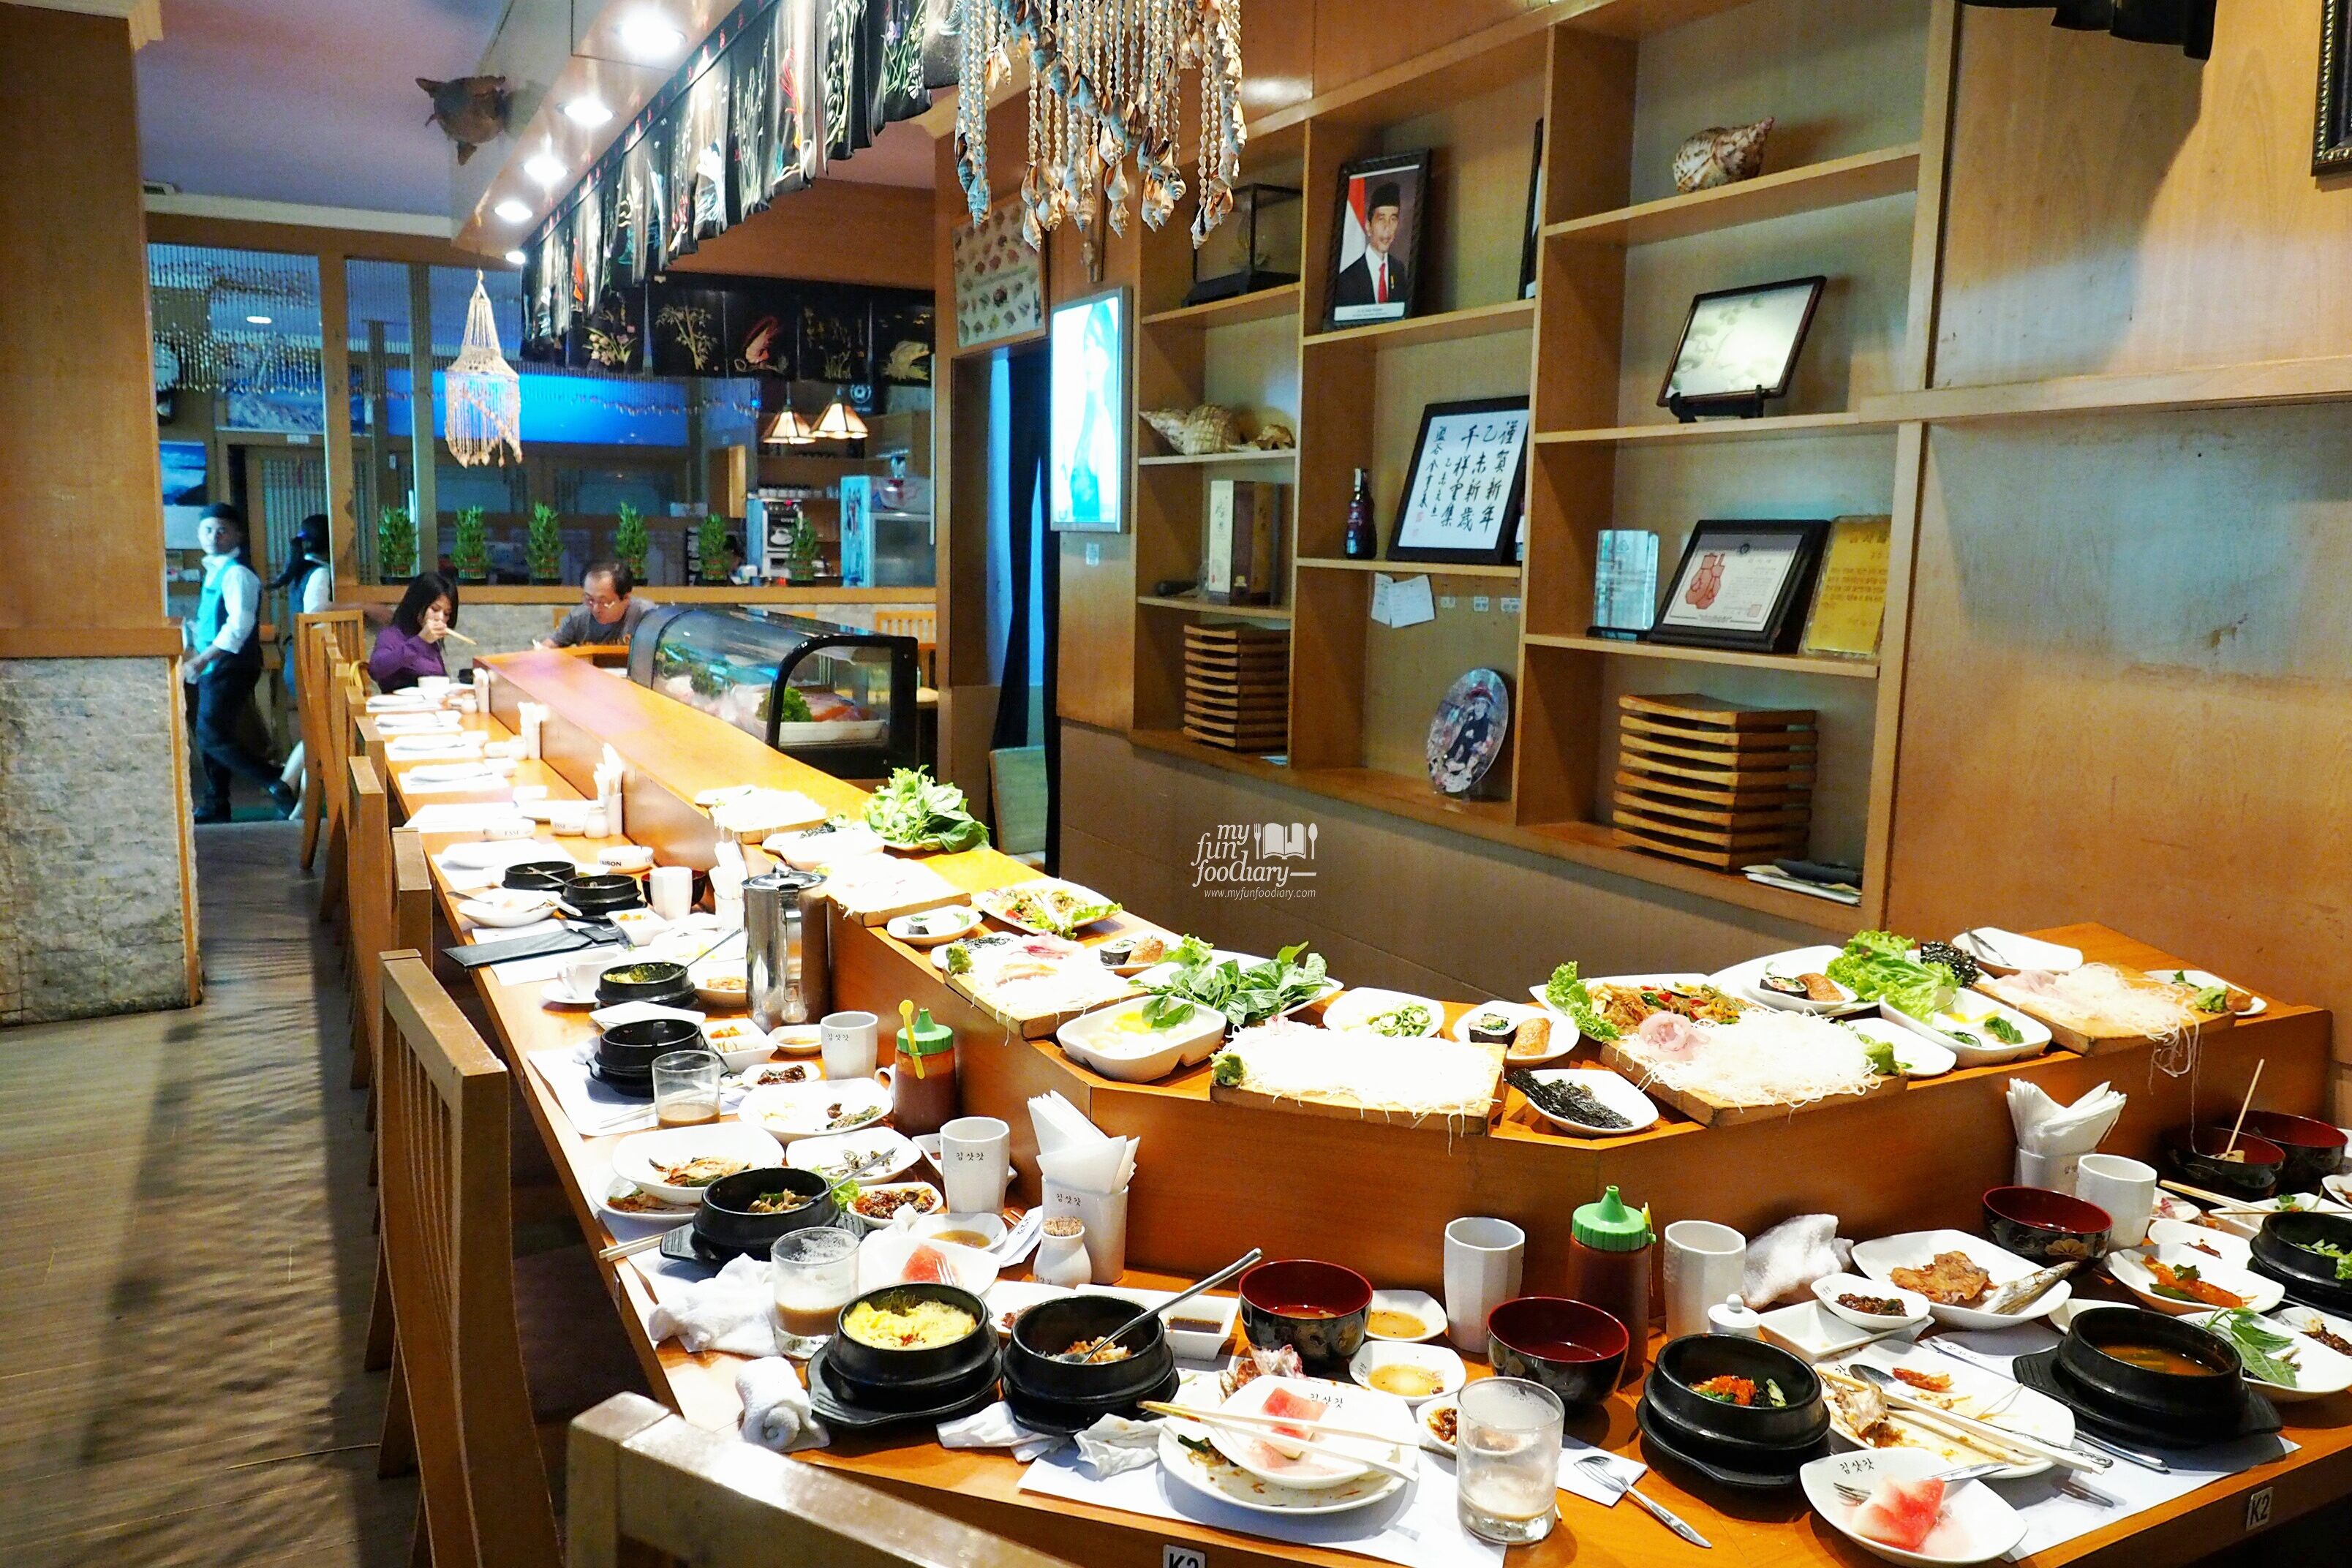 Sushi Sashimi Bar at Kim Sat Gat by Myfunfoodiary